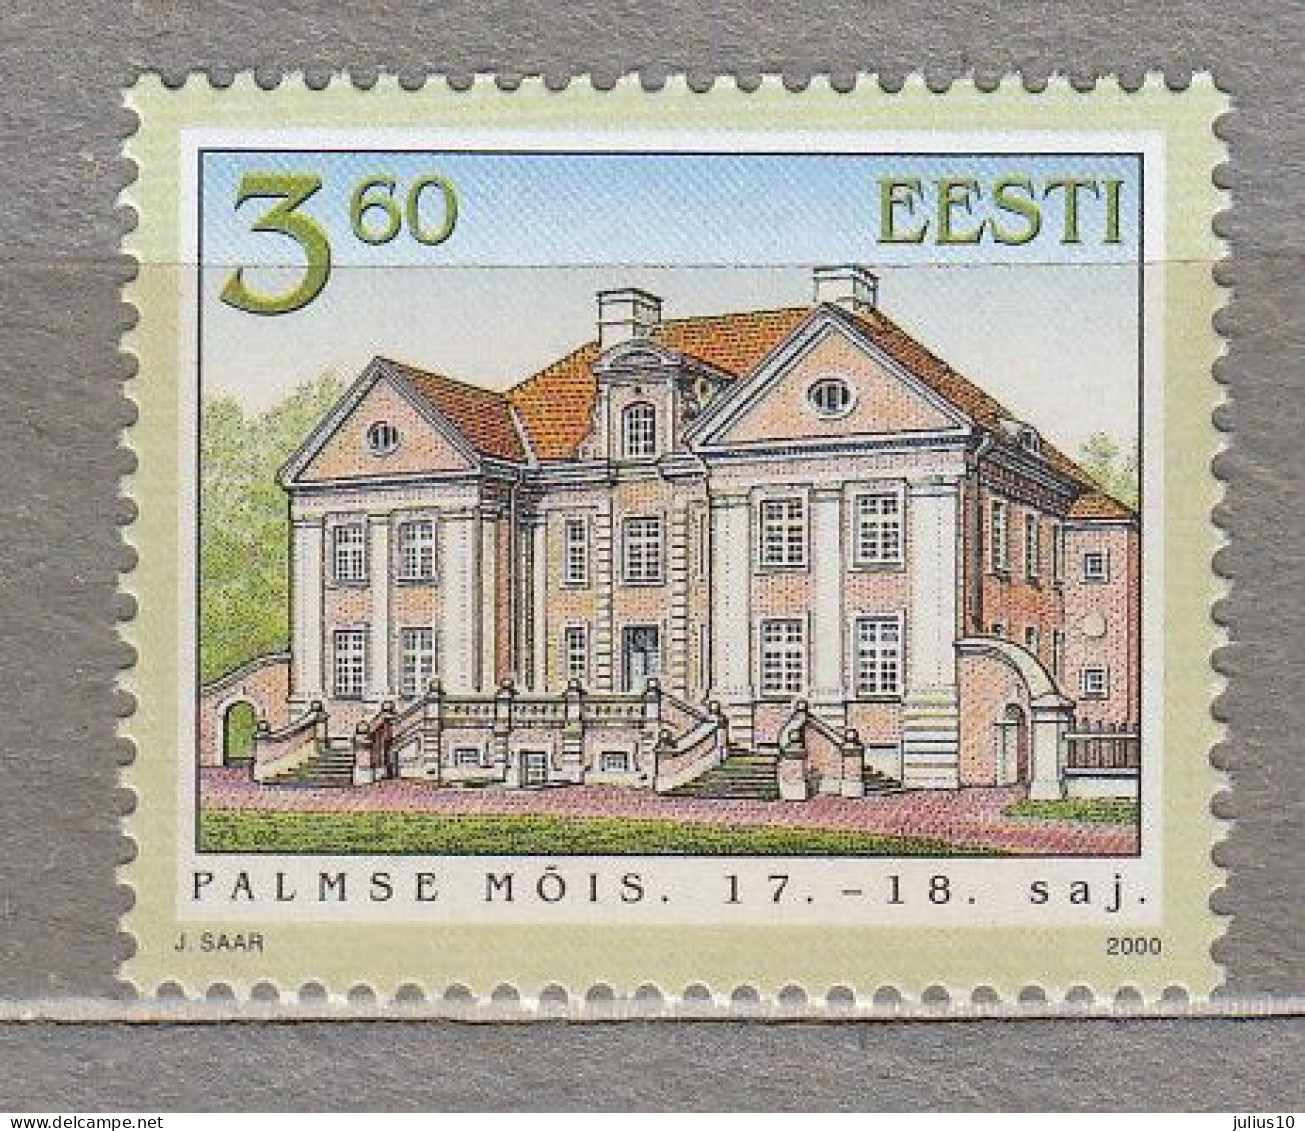 ESTONIA 2000 Architecture MNH(**) Mi 372 # Est358 - Estonia